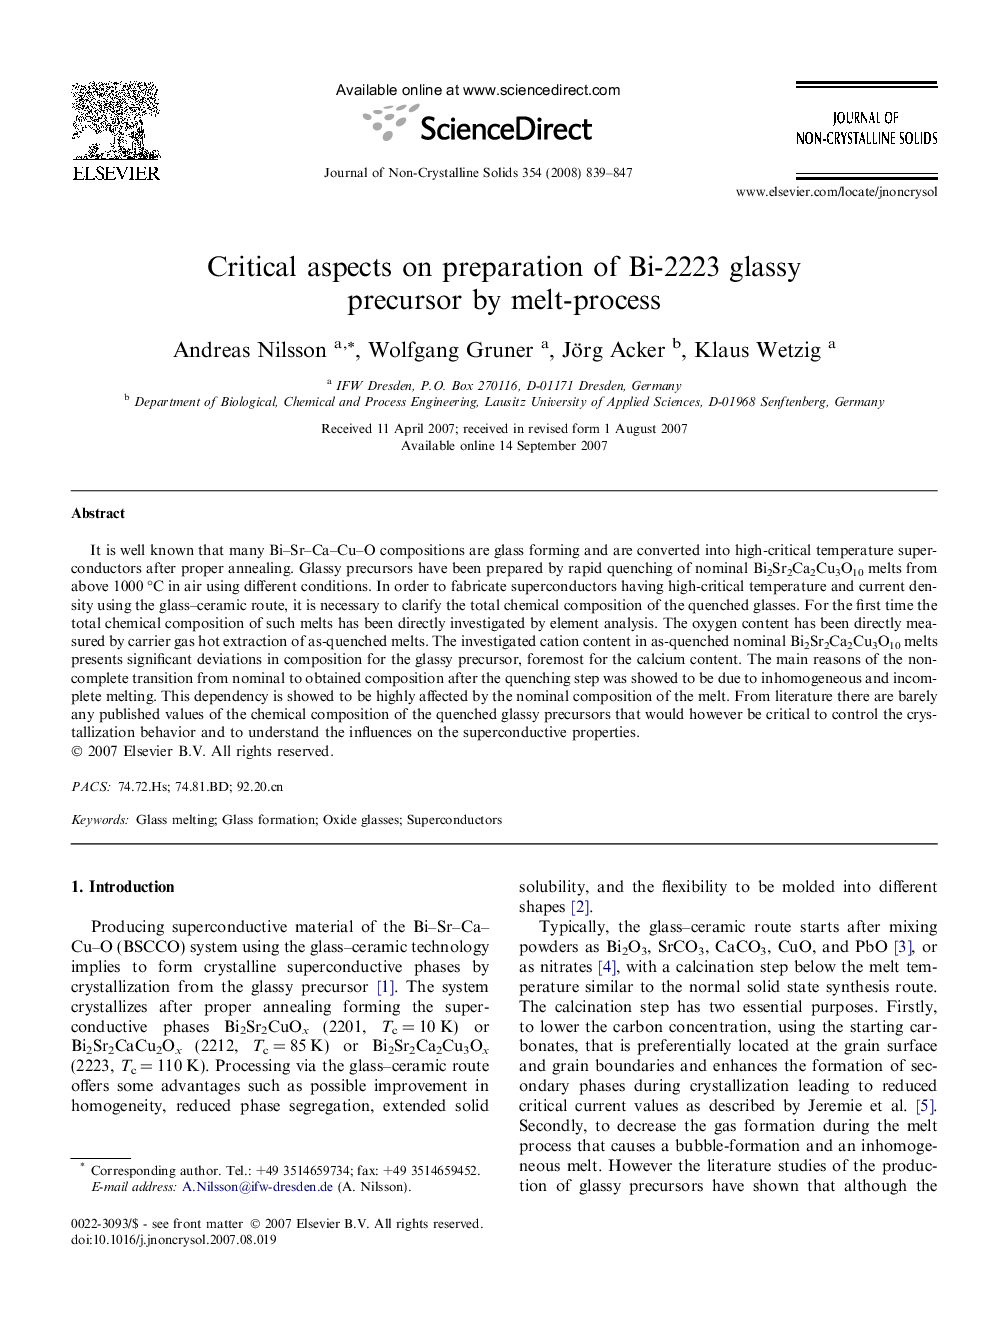 Critical aspects on preparation of Bi-2223 glassy precursor by melt-process